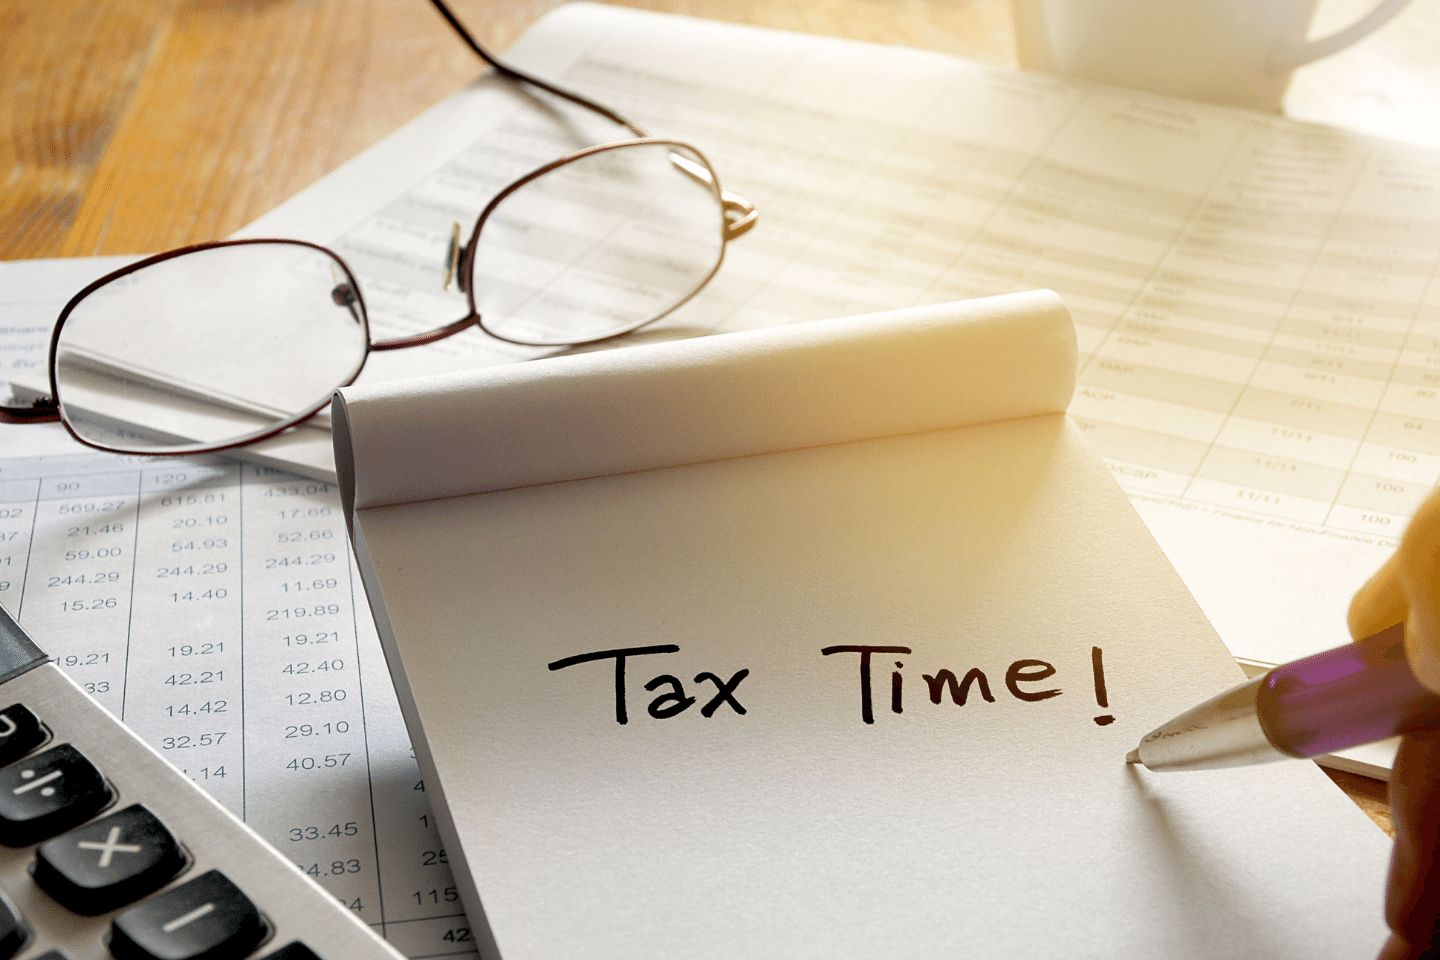 June Tax Preparation Tips